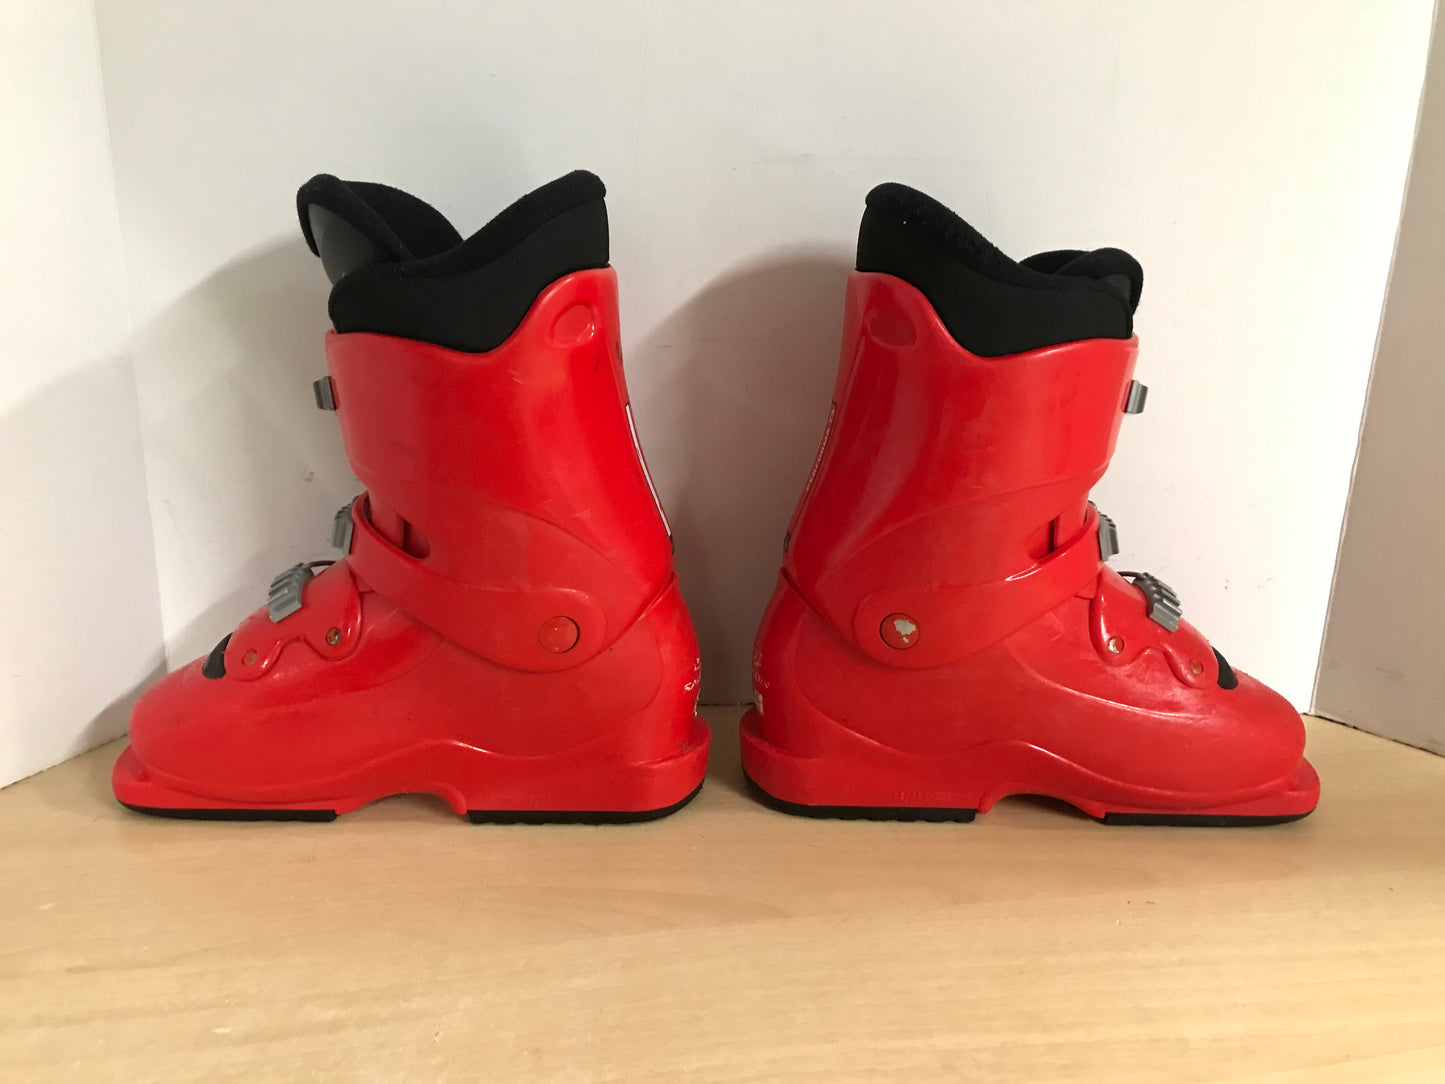 Ski Boots Mondo Size 22.0  Child Size 3-4 266 mm Salomon Red Black Minor Wear